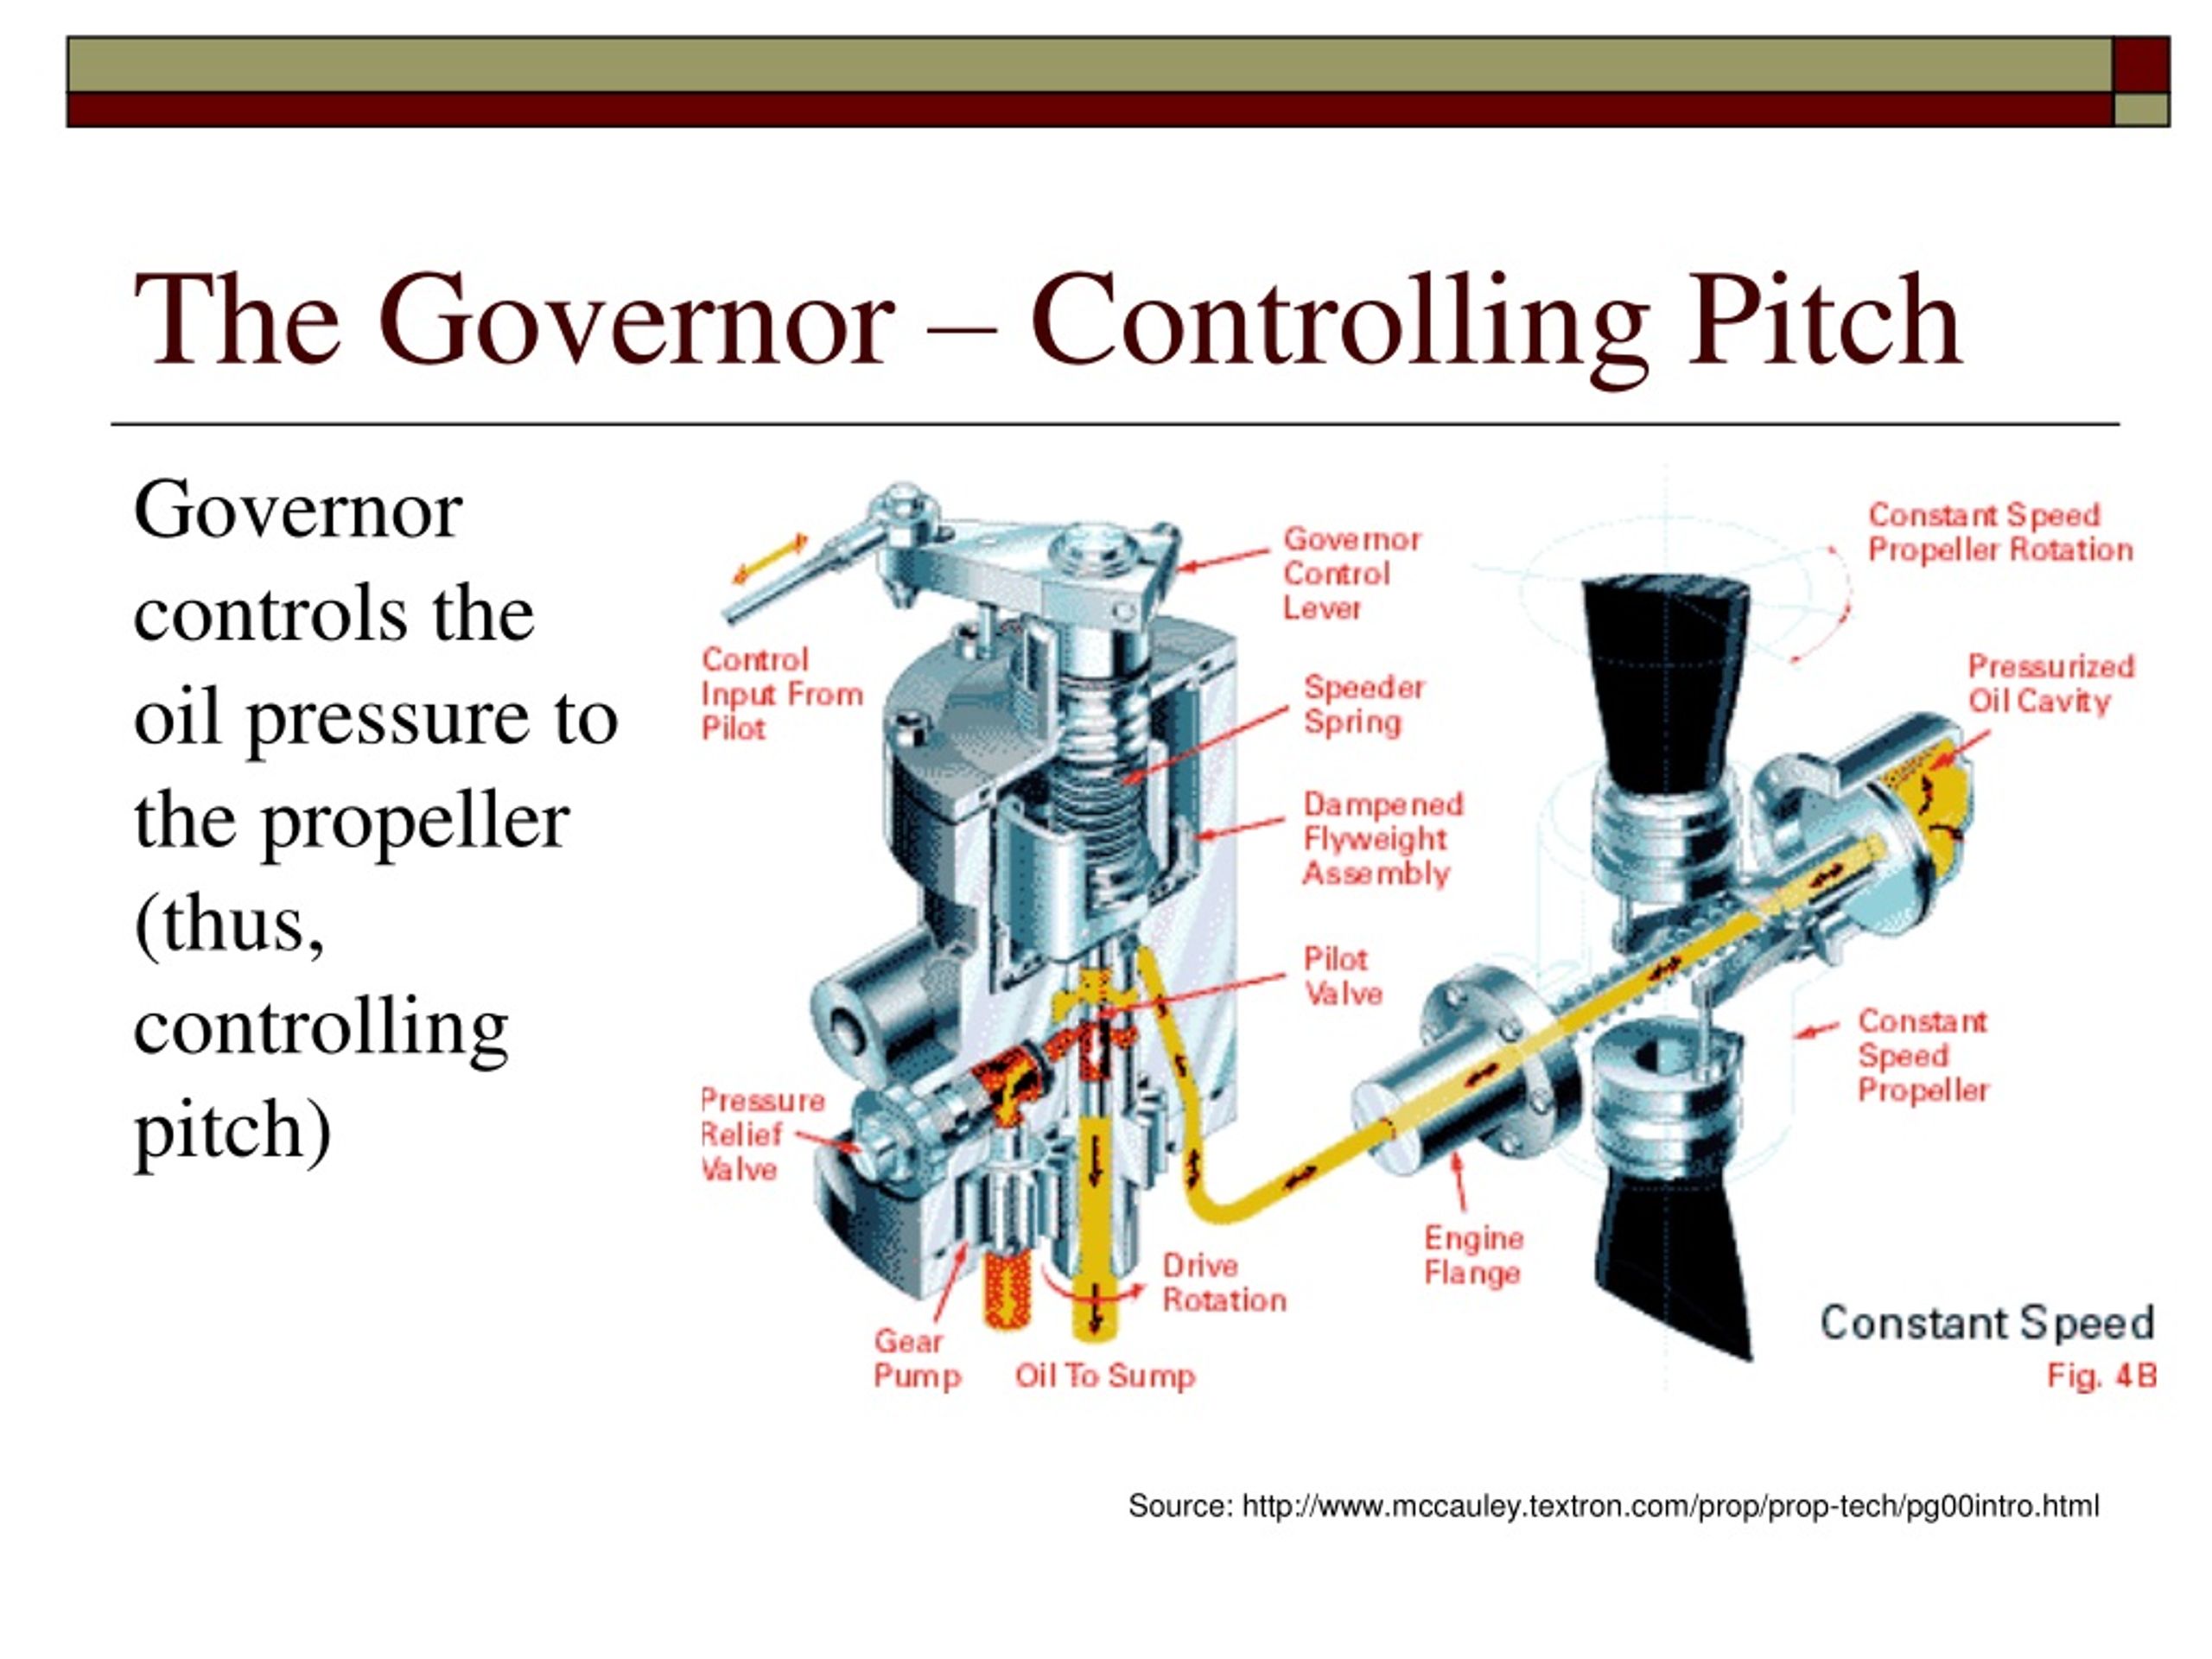 Gov control. Constant-Speed Propeller. Propeller Governor. Controllable Pitch Propeller. Propeller Pitch Control.